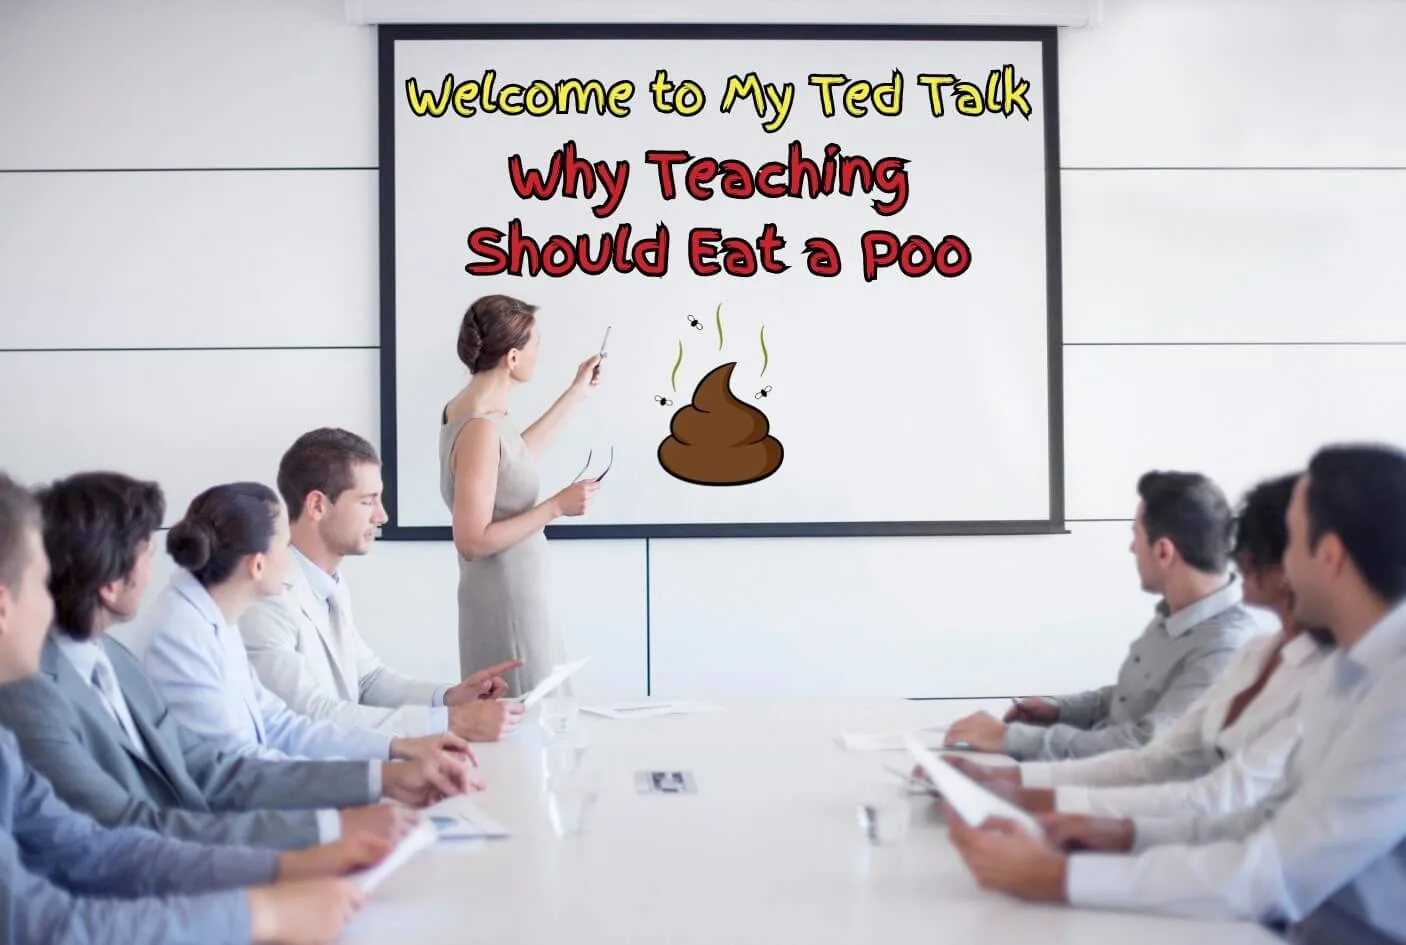 A former teacher gives a presentation on why she hates teaching.